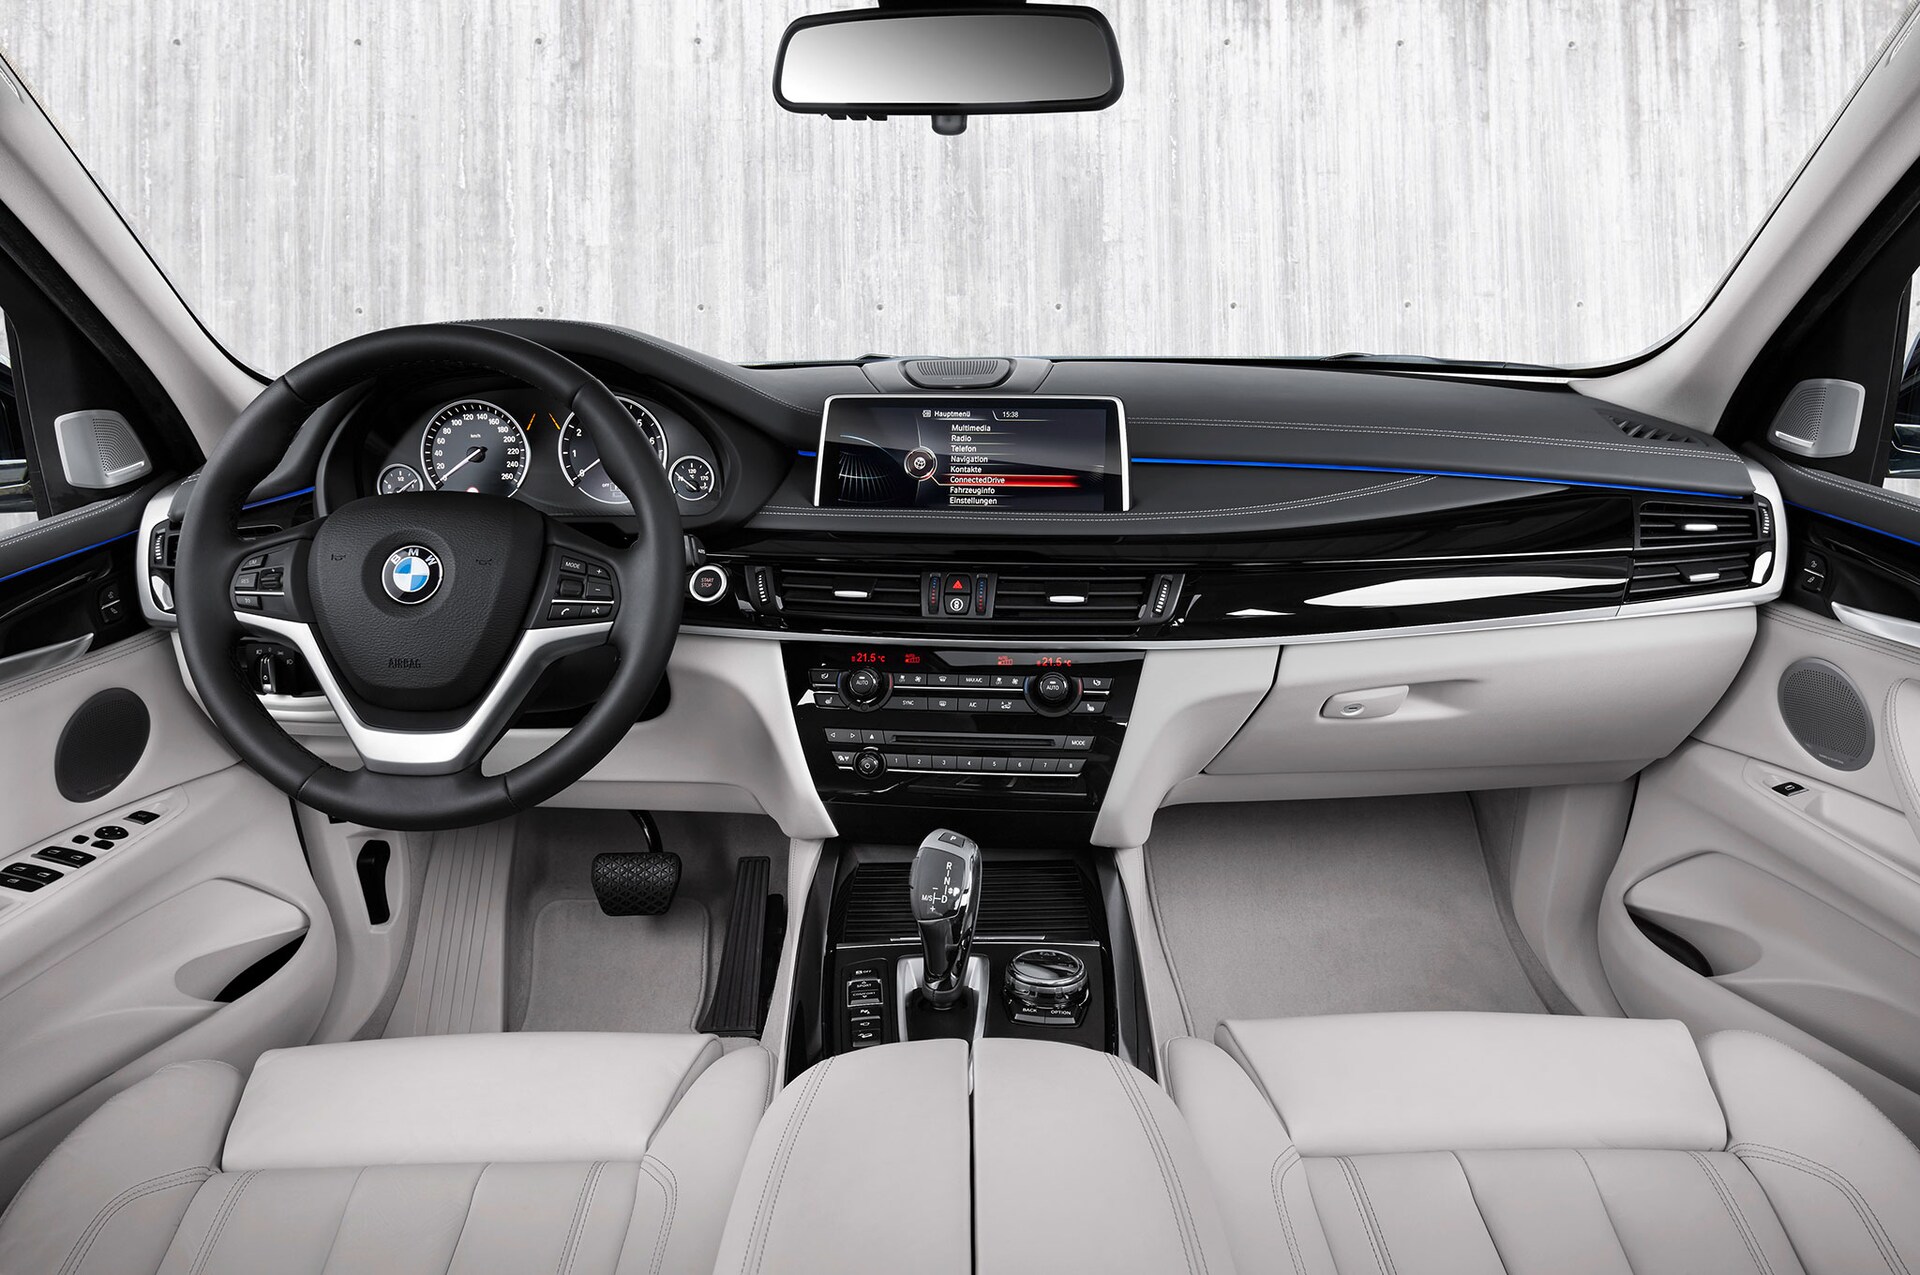 BMW X5 xDrive40e Plug-in Hybrid Revealed